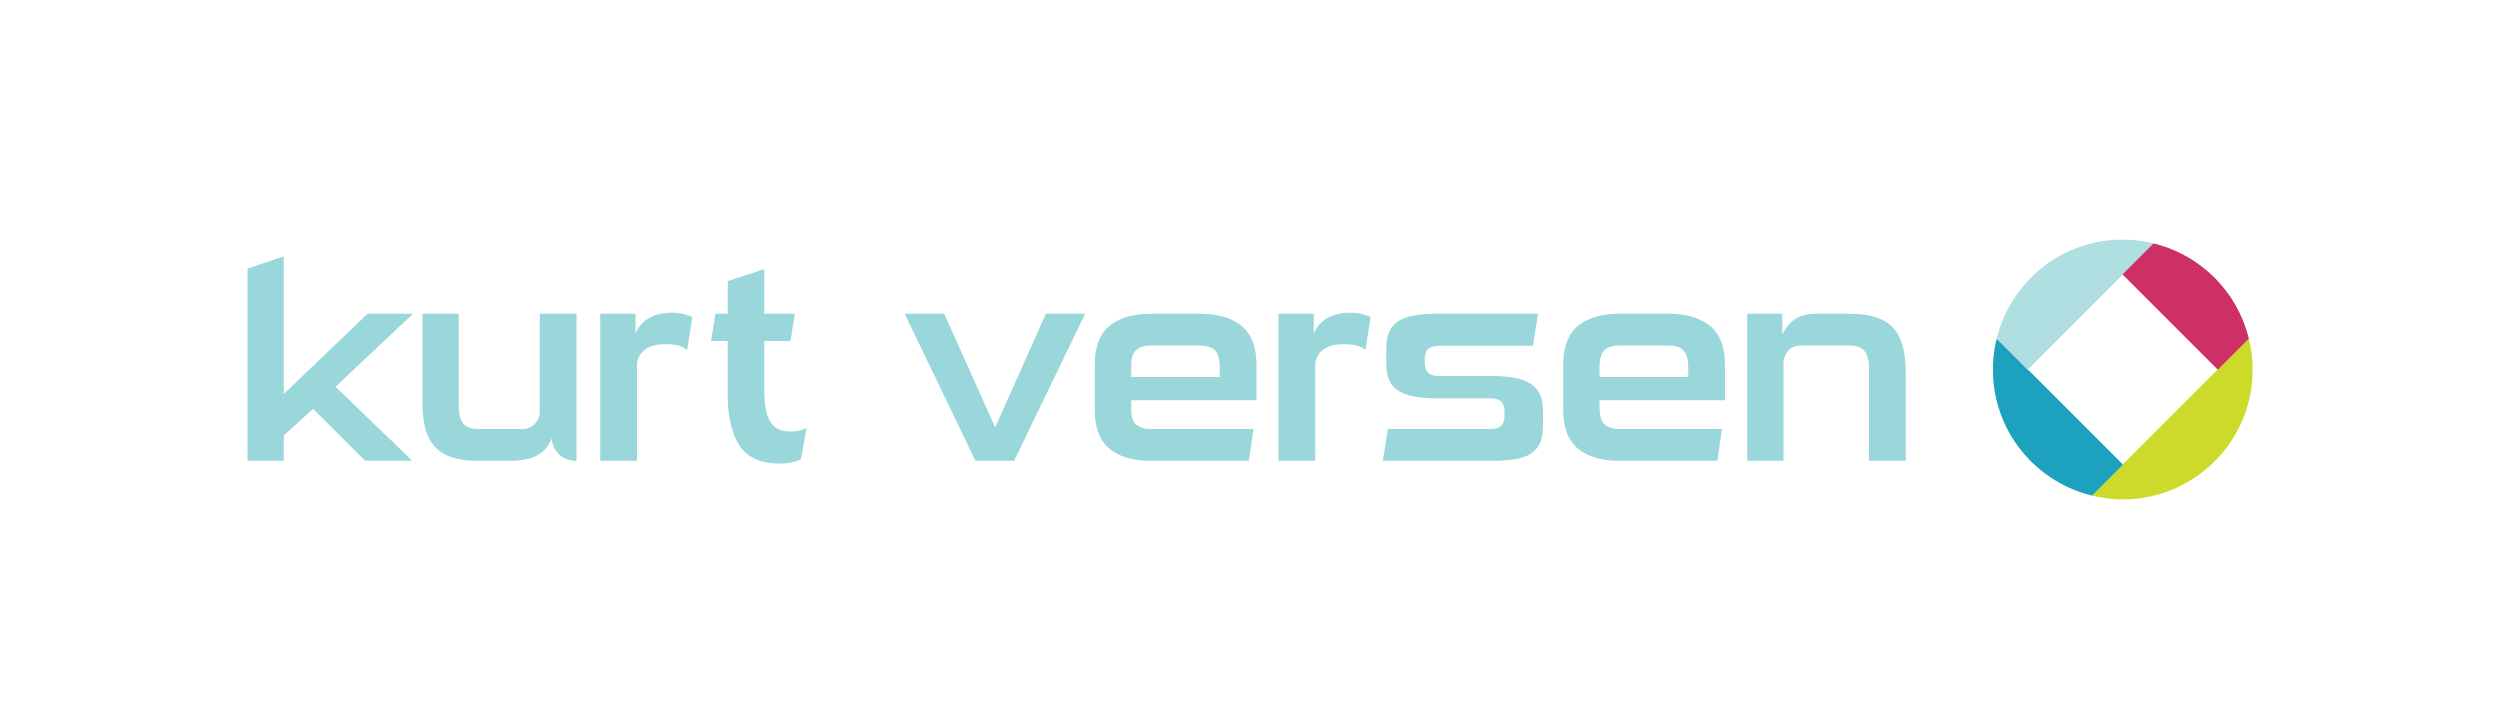 Kurt Versen Logo